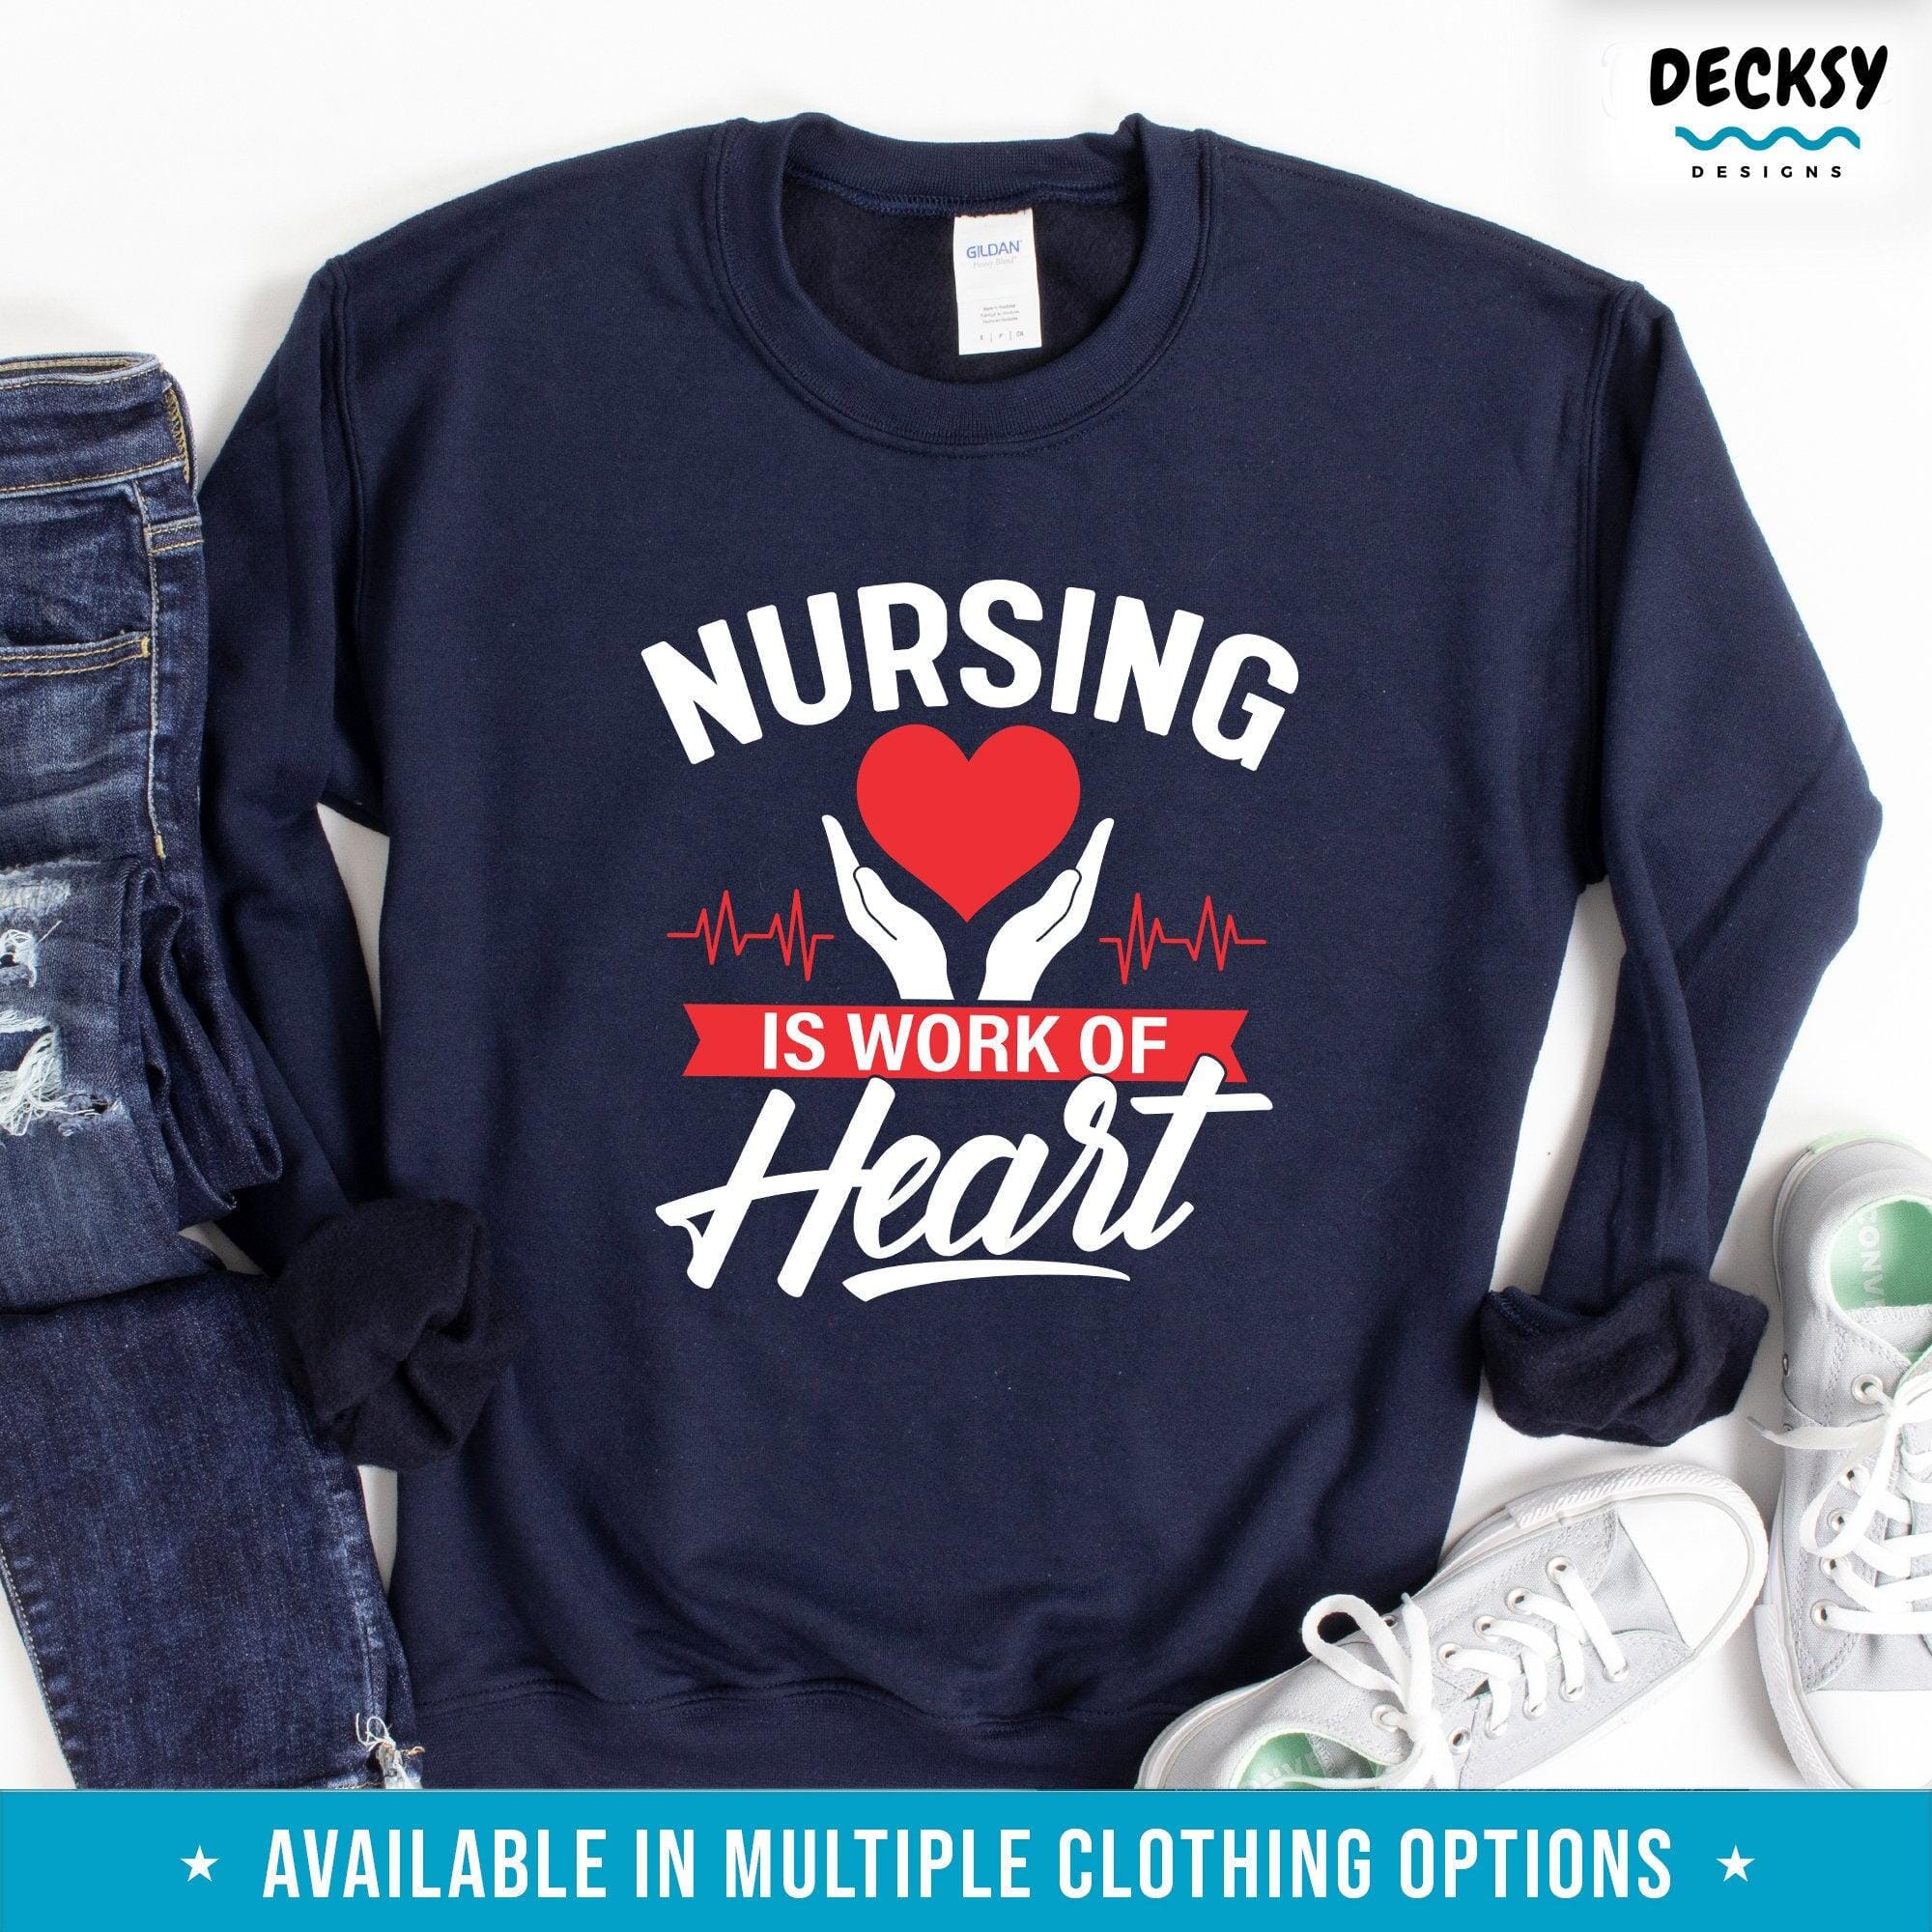 Nurse Work Shirt, Nurse Shirt, Nurse Student Shirt, Nurse Tshirts